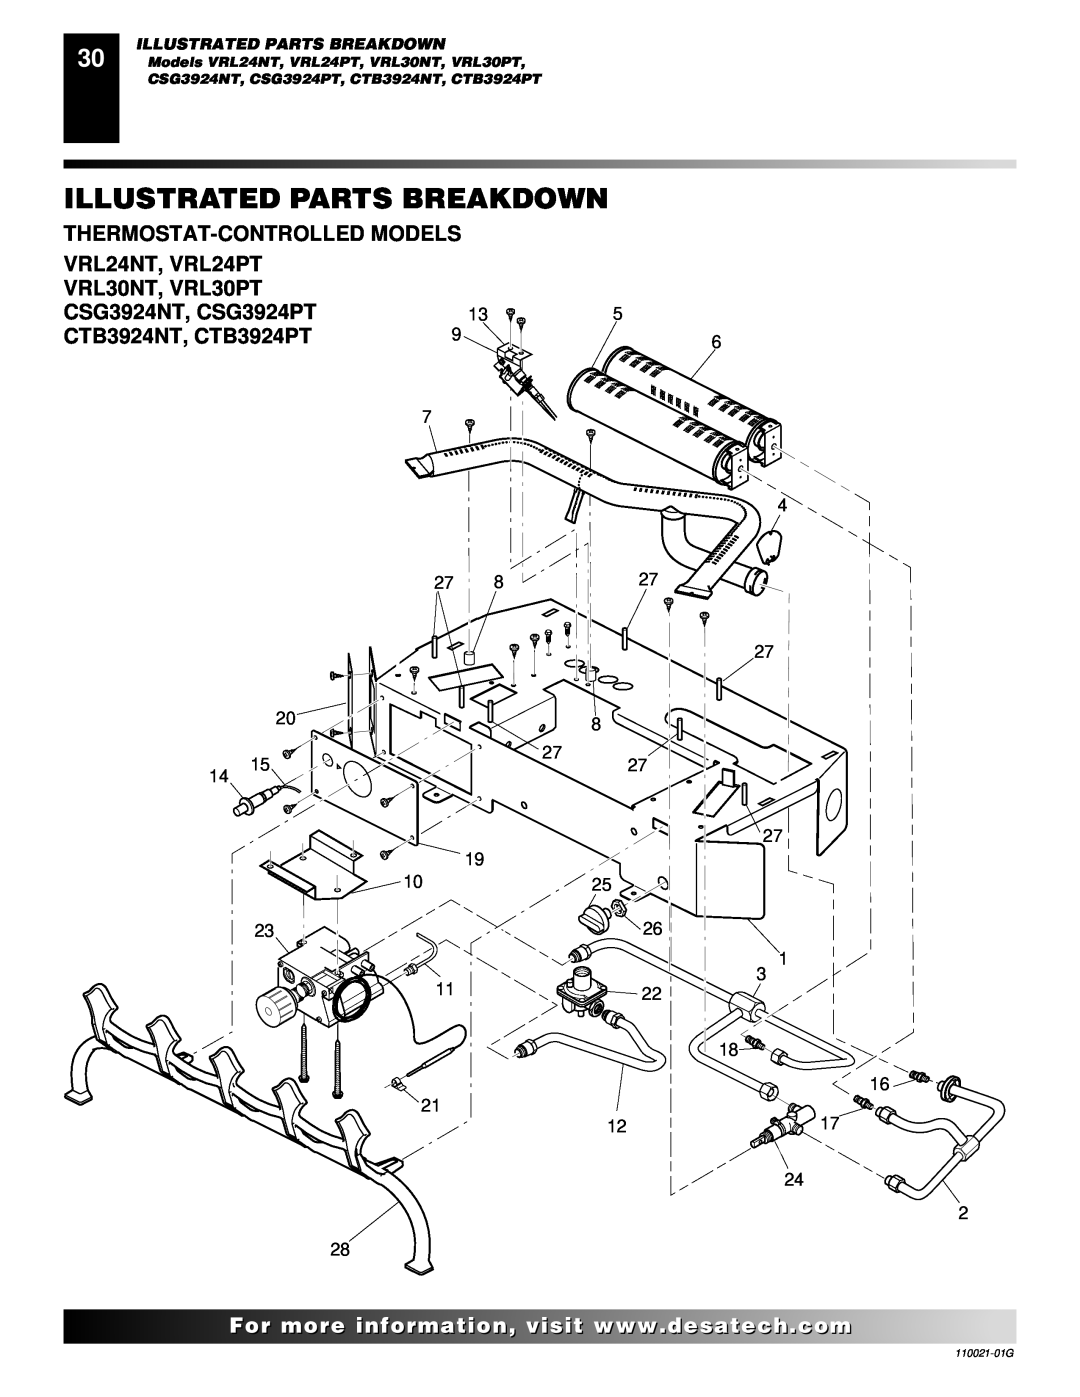 Desa CSG3930PR, CSG3930NR installation manual Thermostat-Controlledmodels, Illustrated Parts Breakdown 